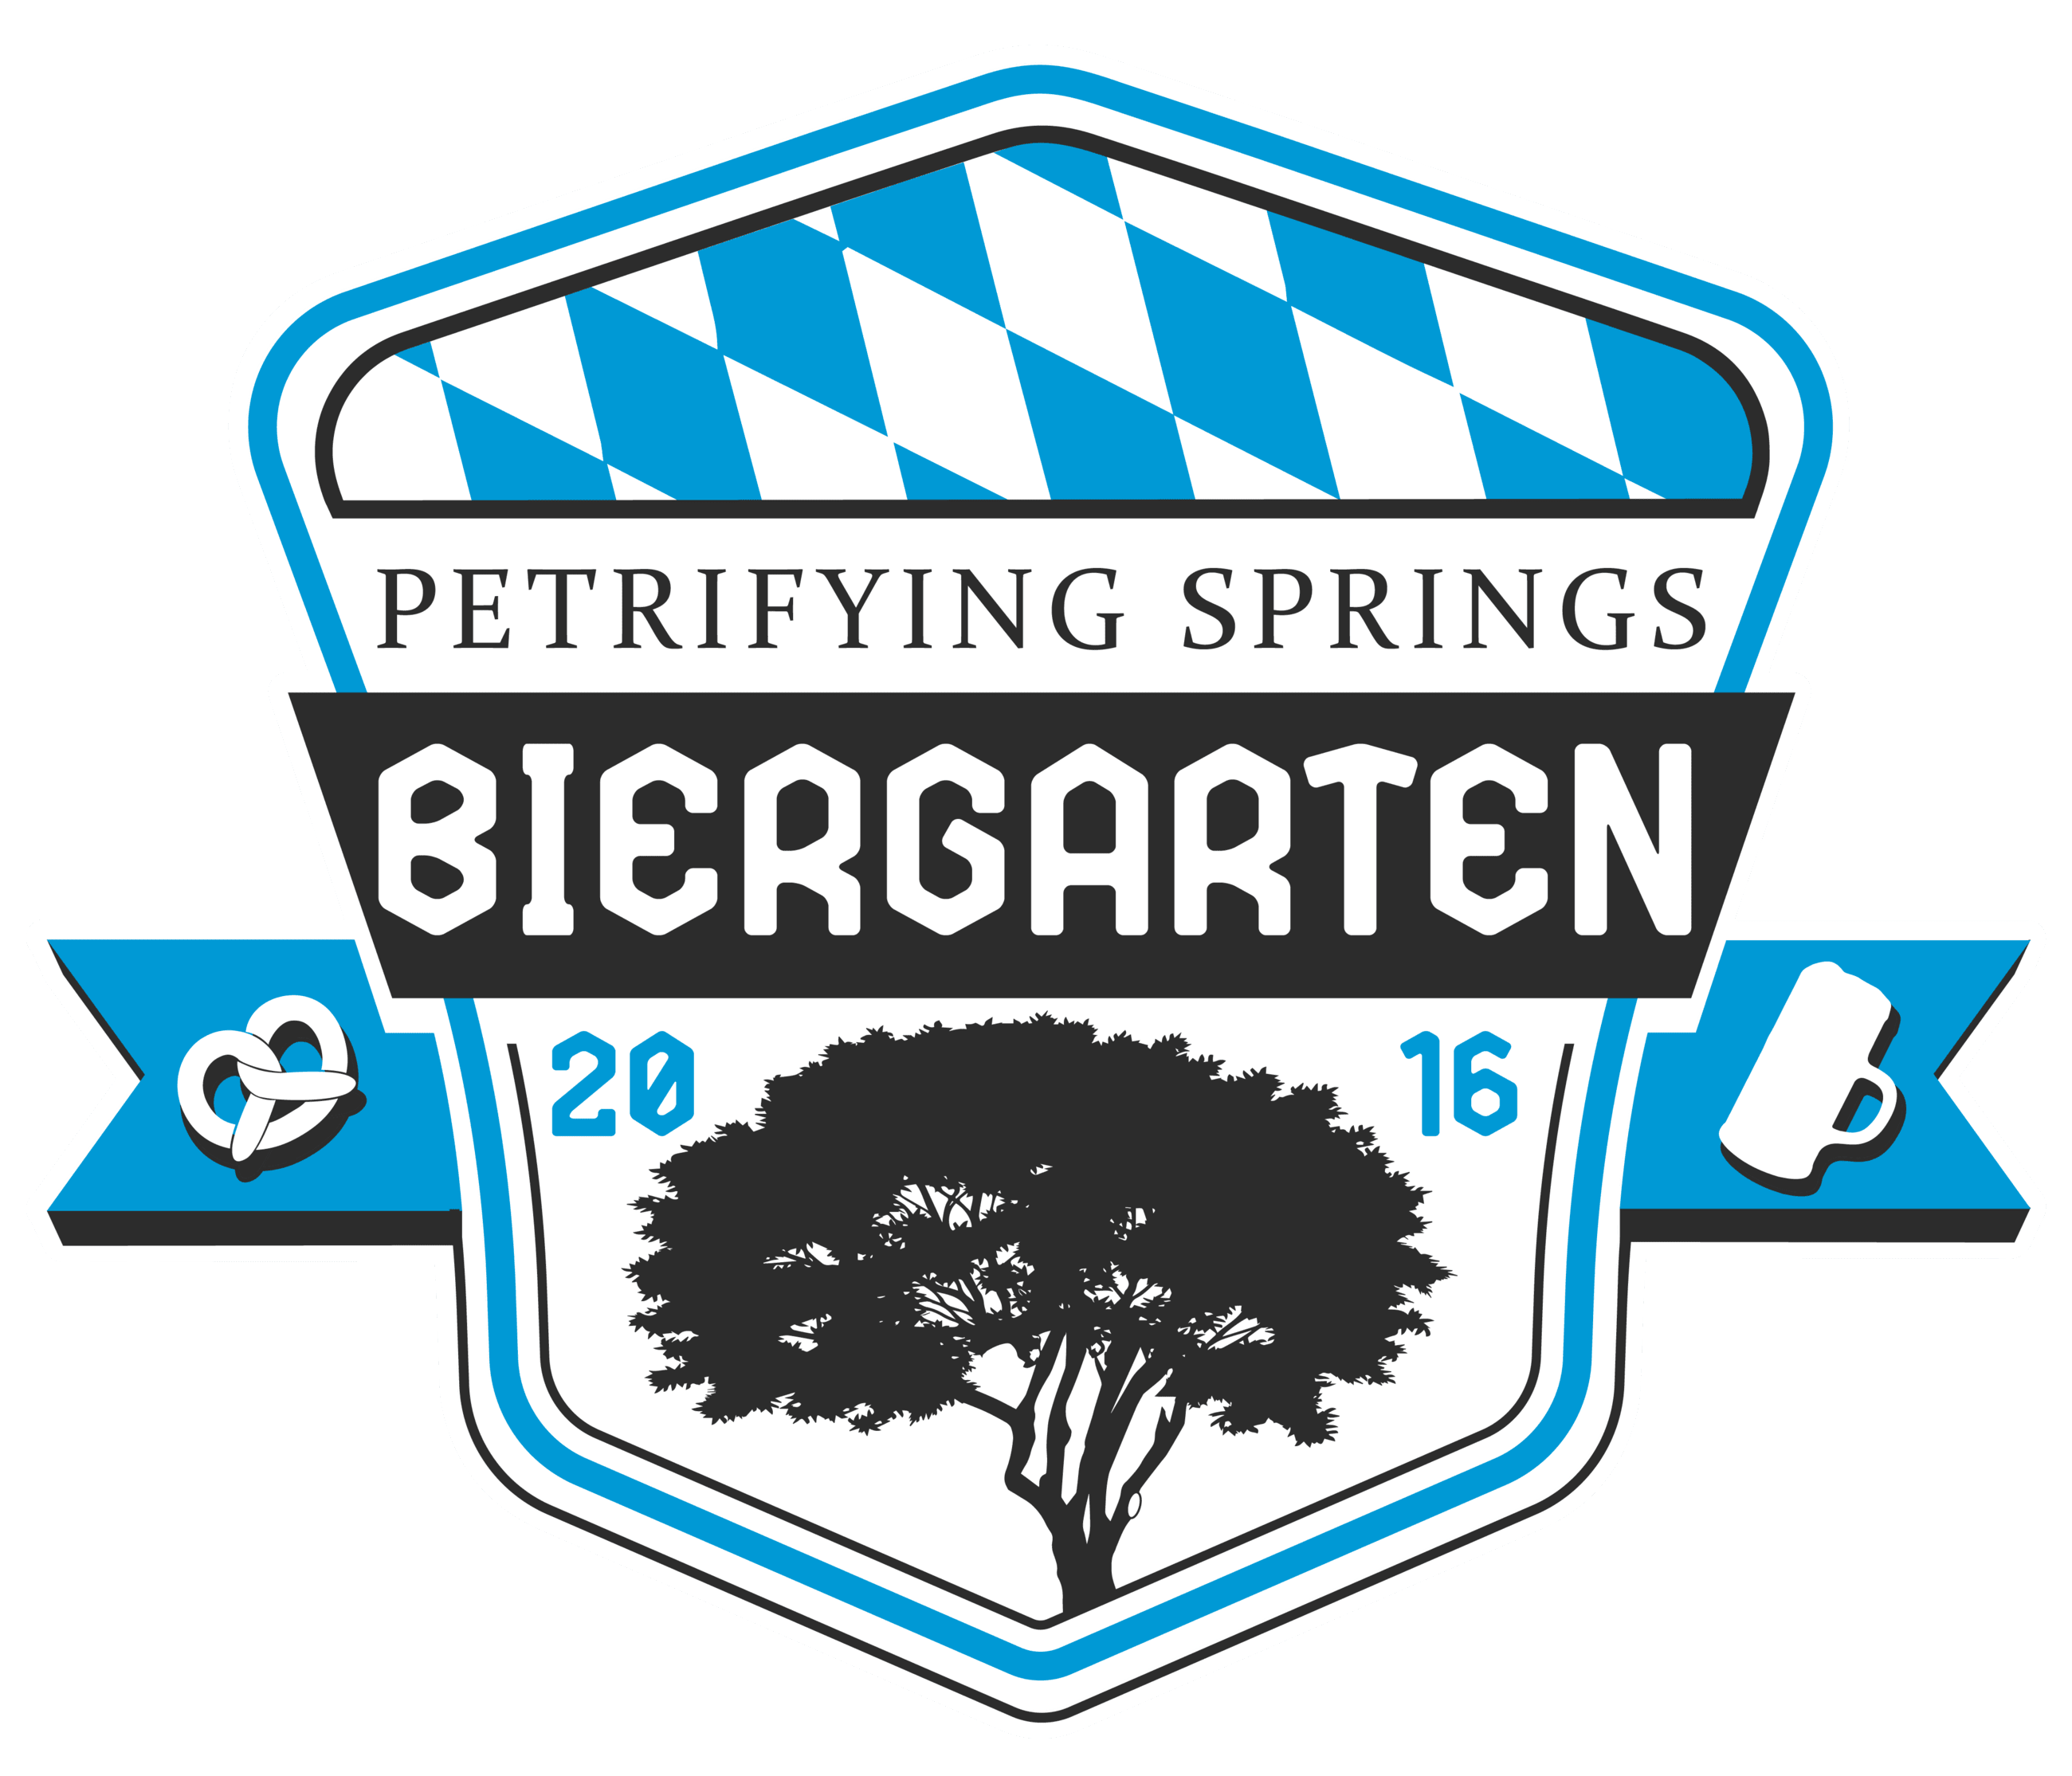 Petrifying Springs Biergarten